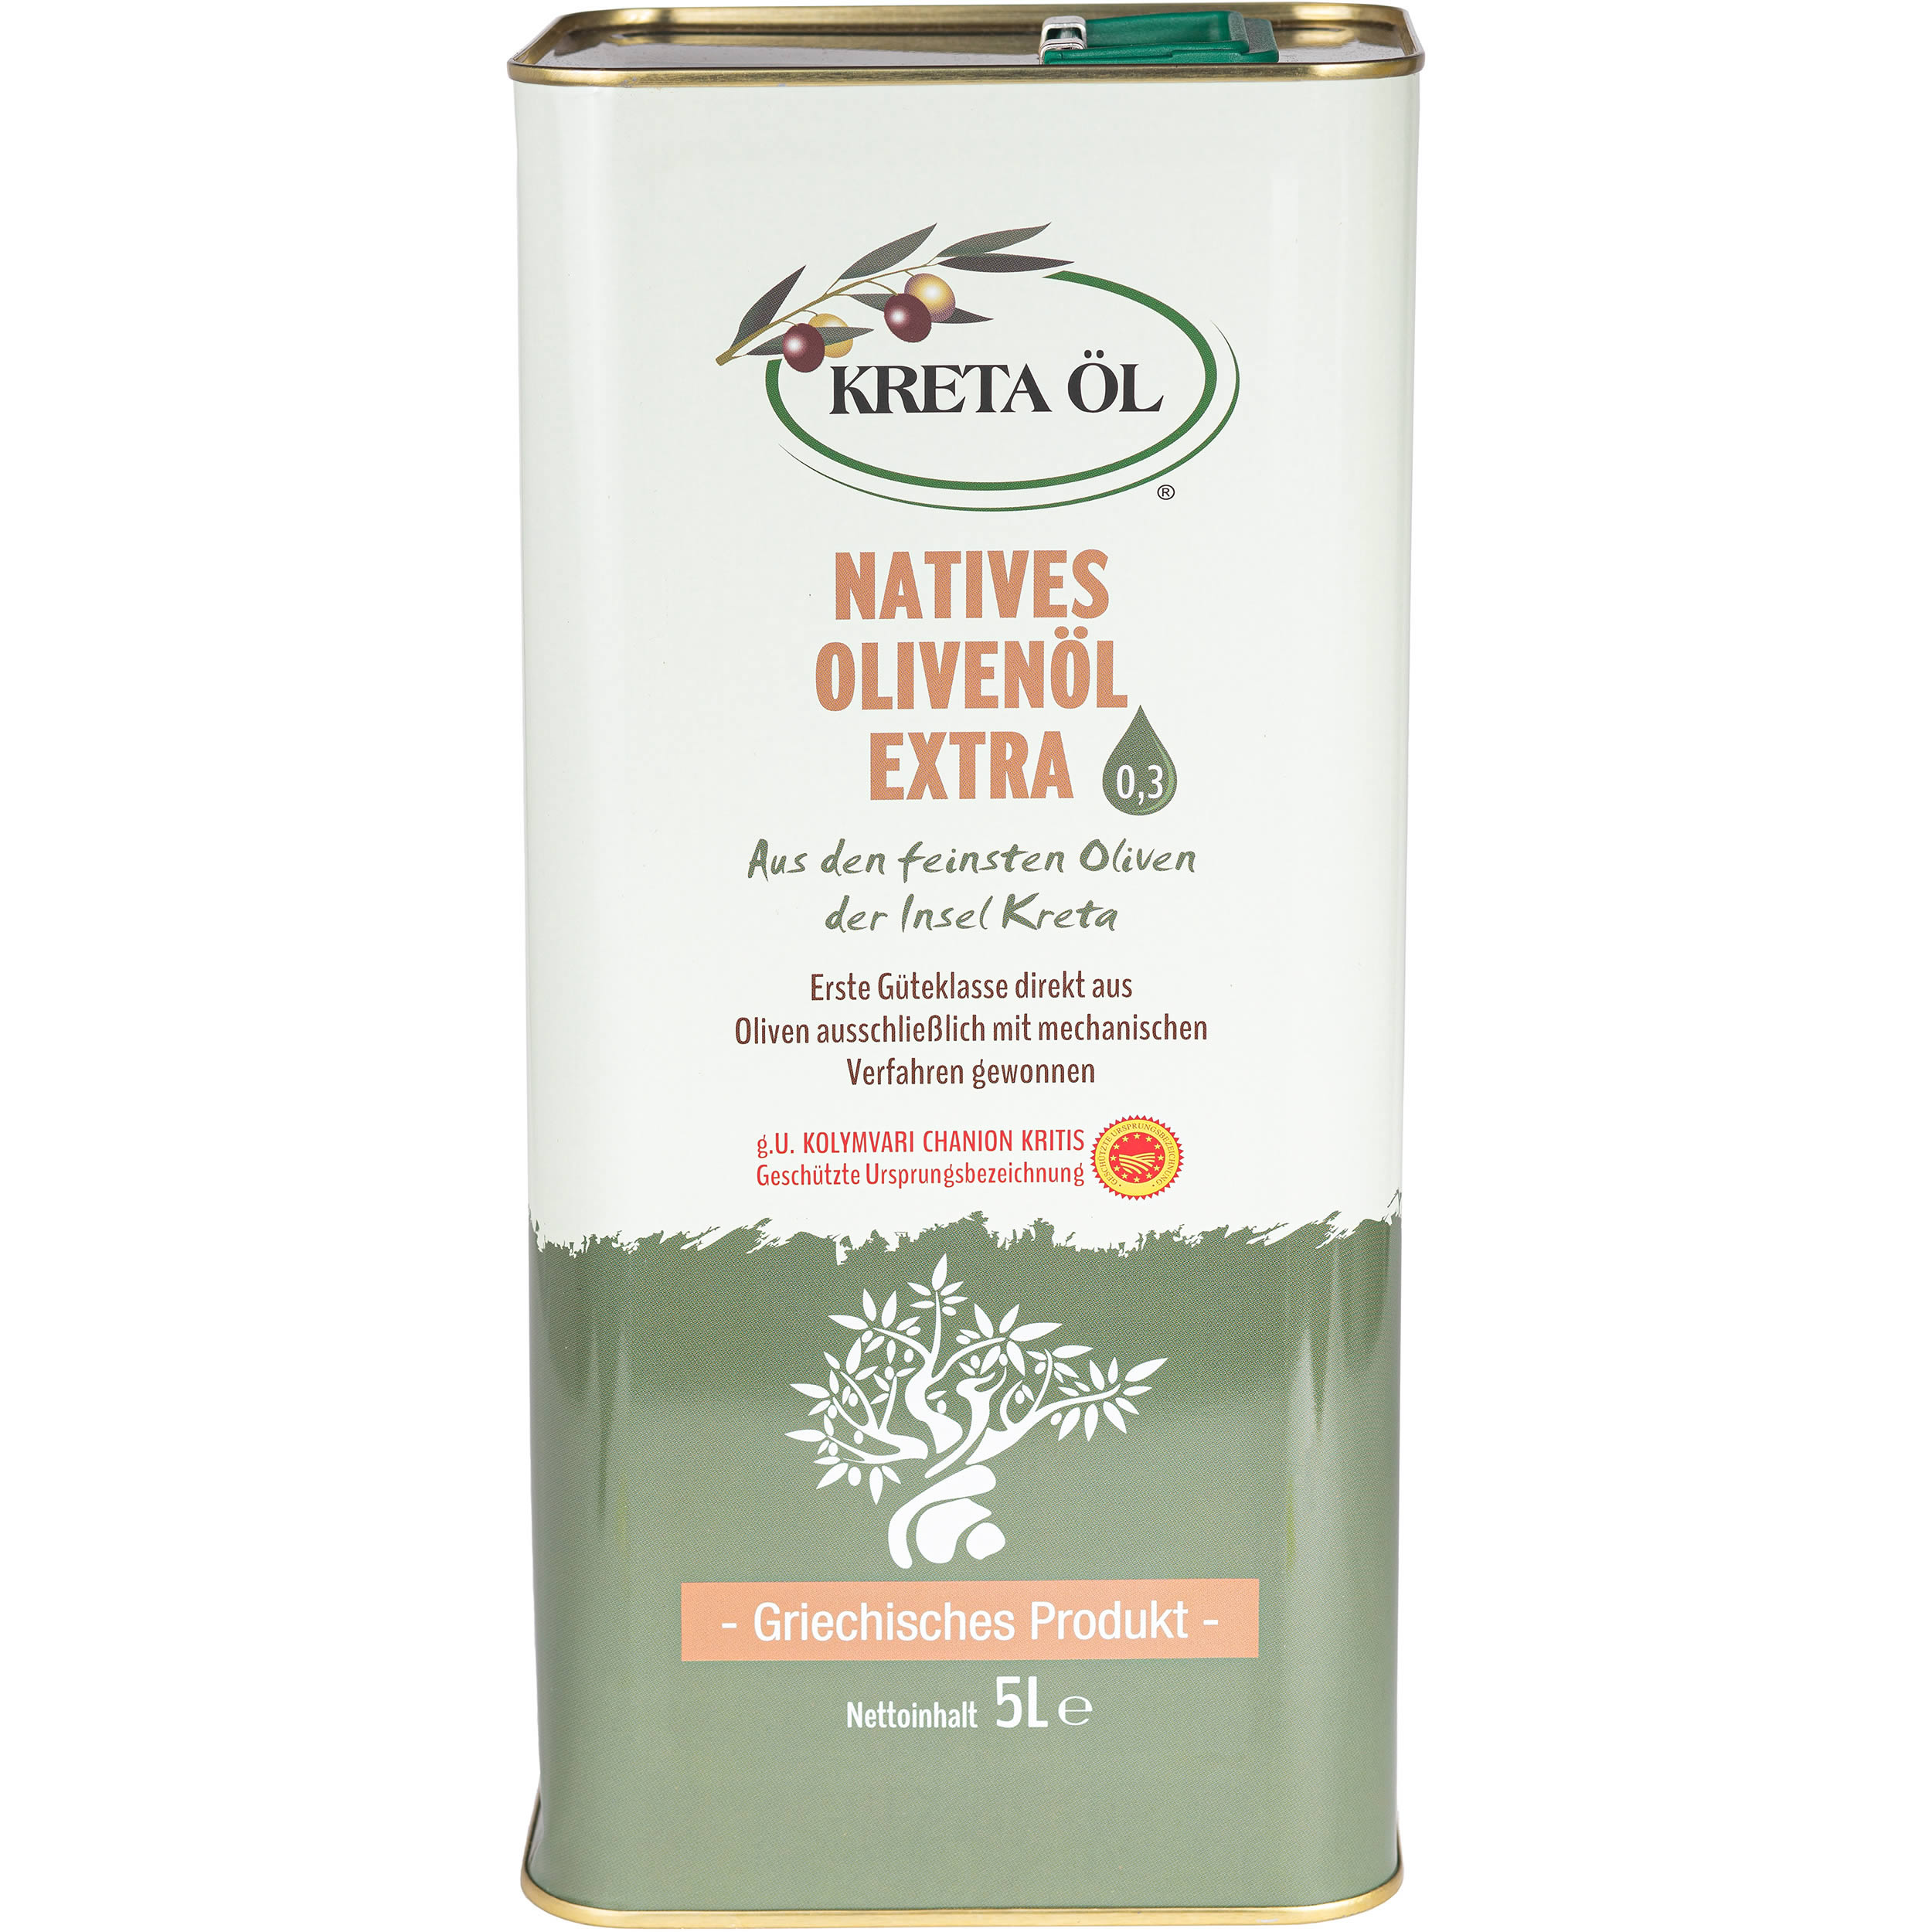 Kreta Öl ® - Extra natives Olivenöl mit max. 0.3 % Säuregehalt 5 l